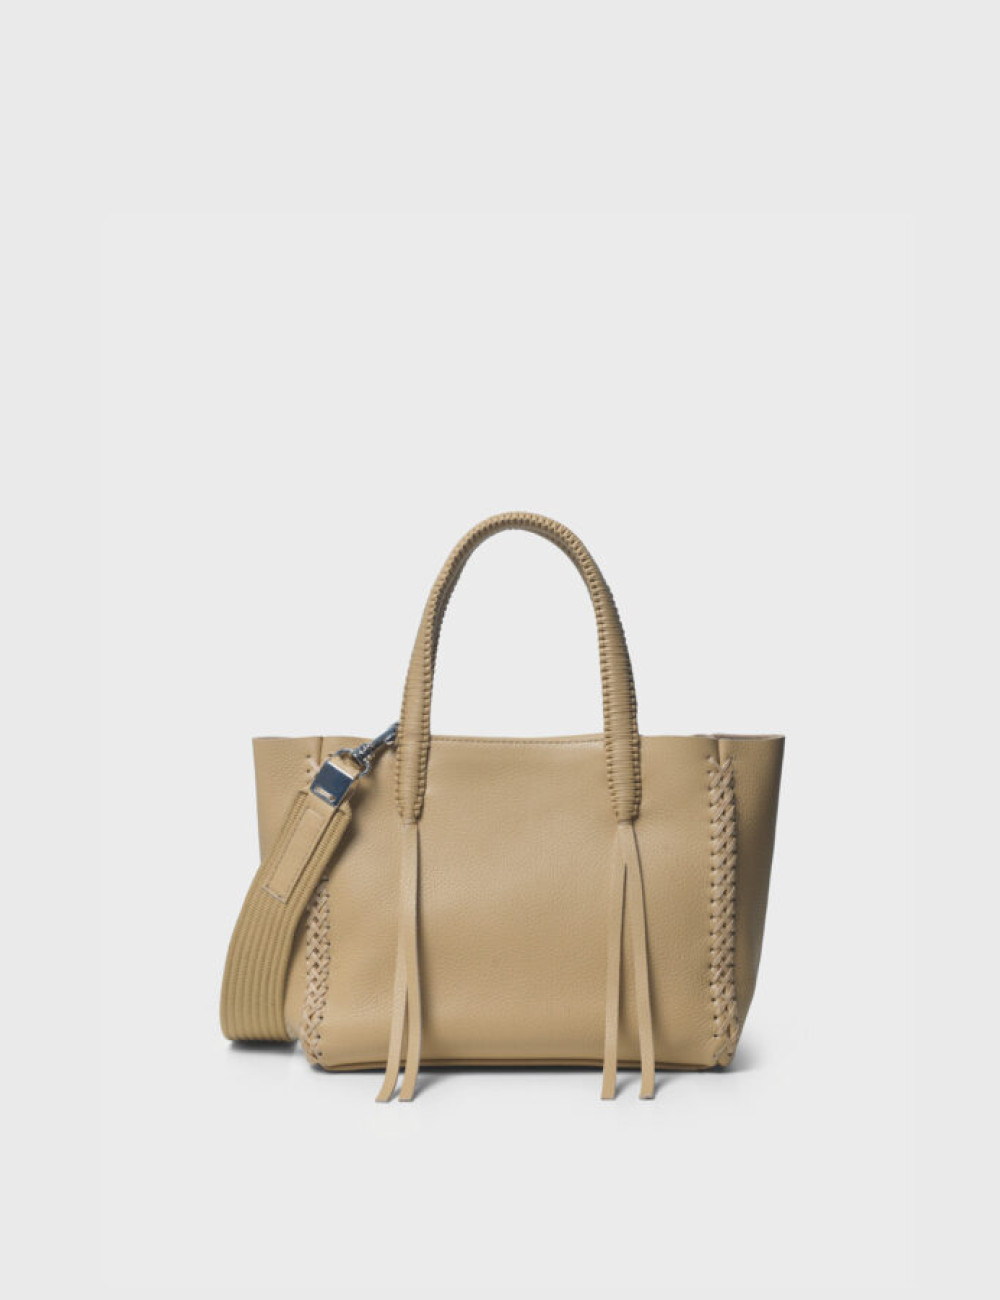 Woman's Mini Tote Bag